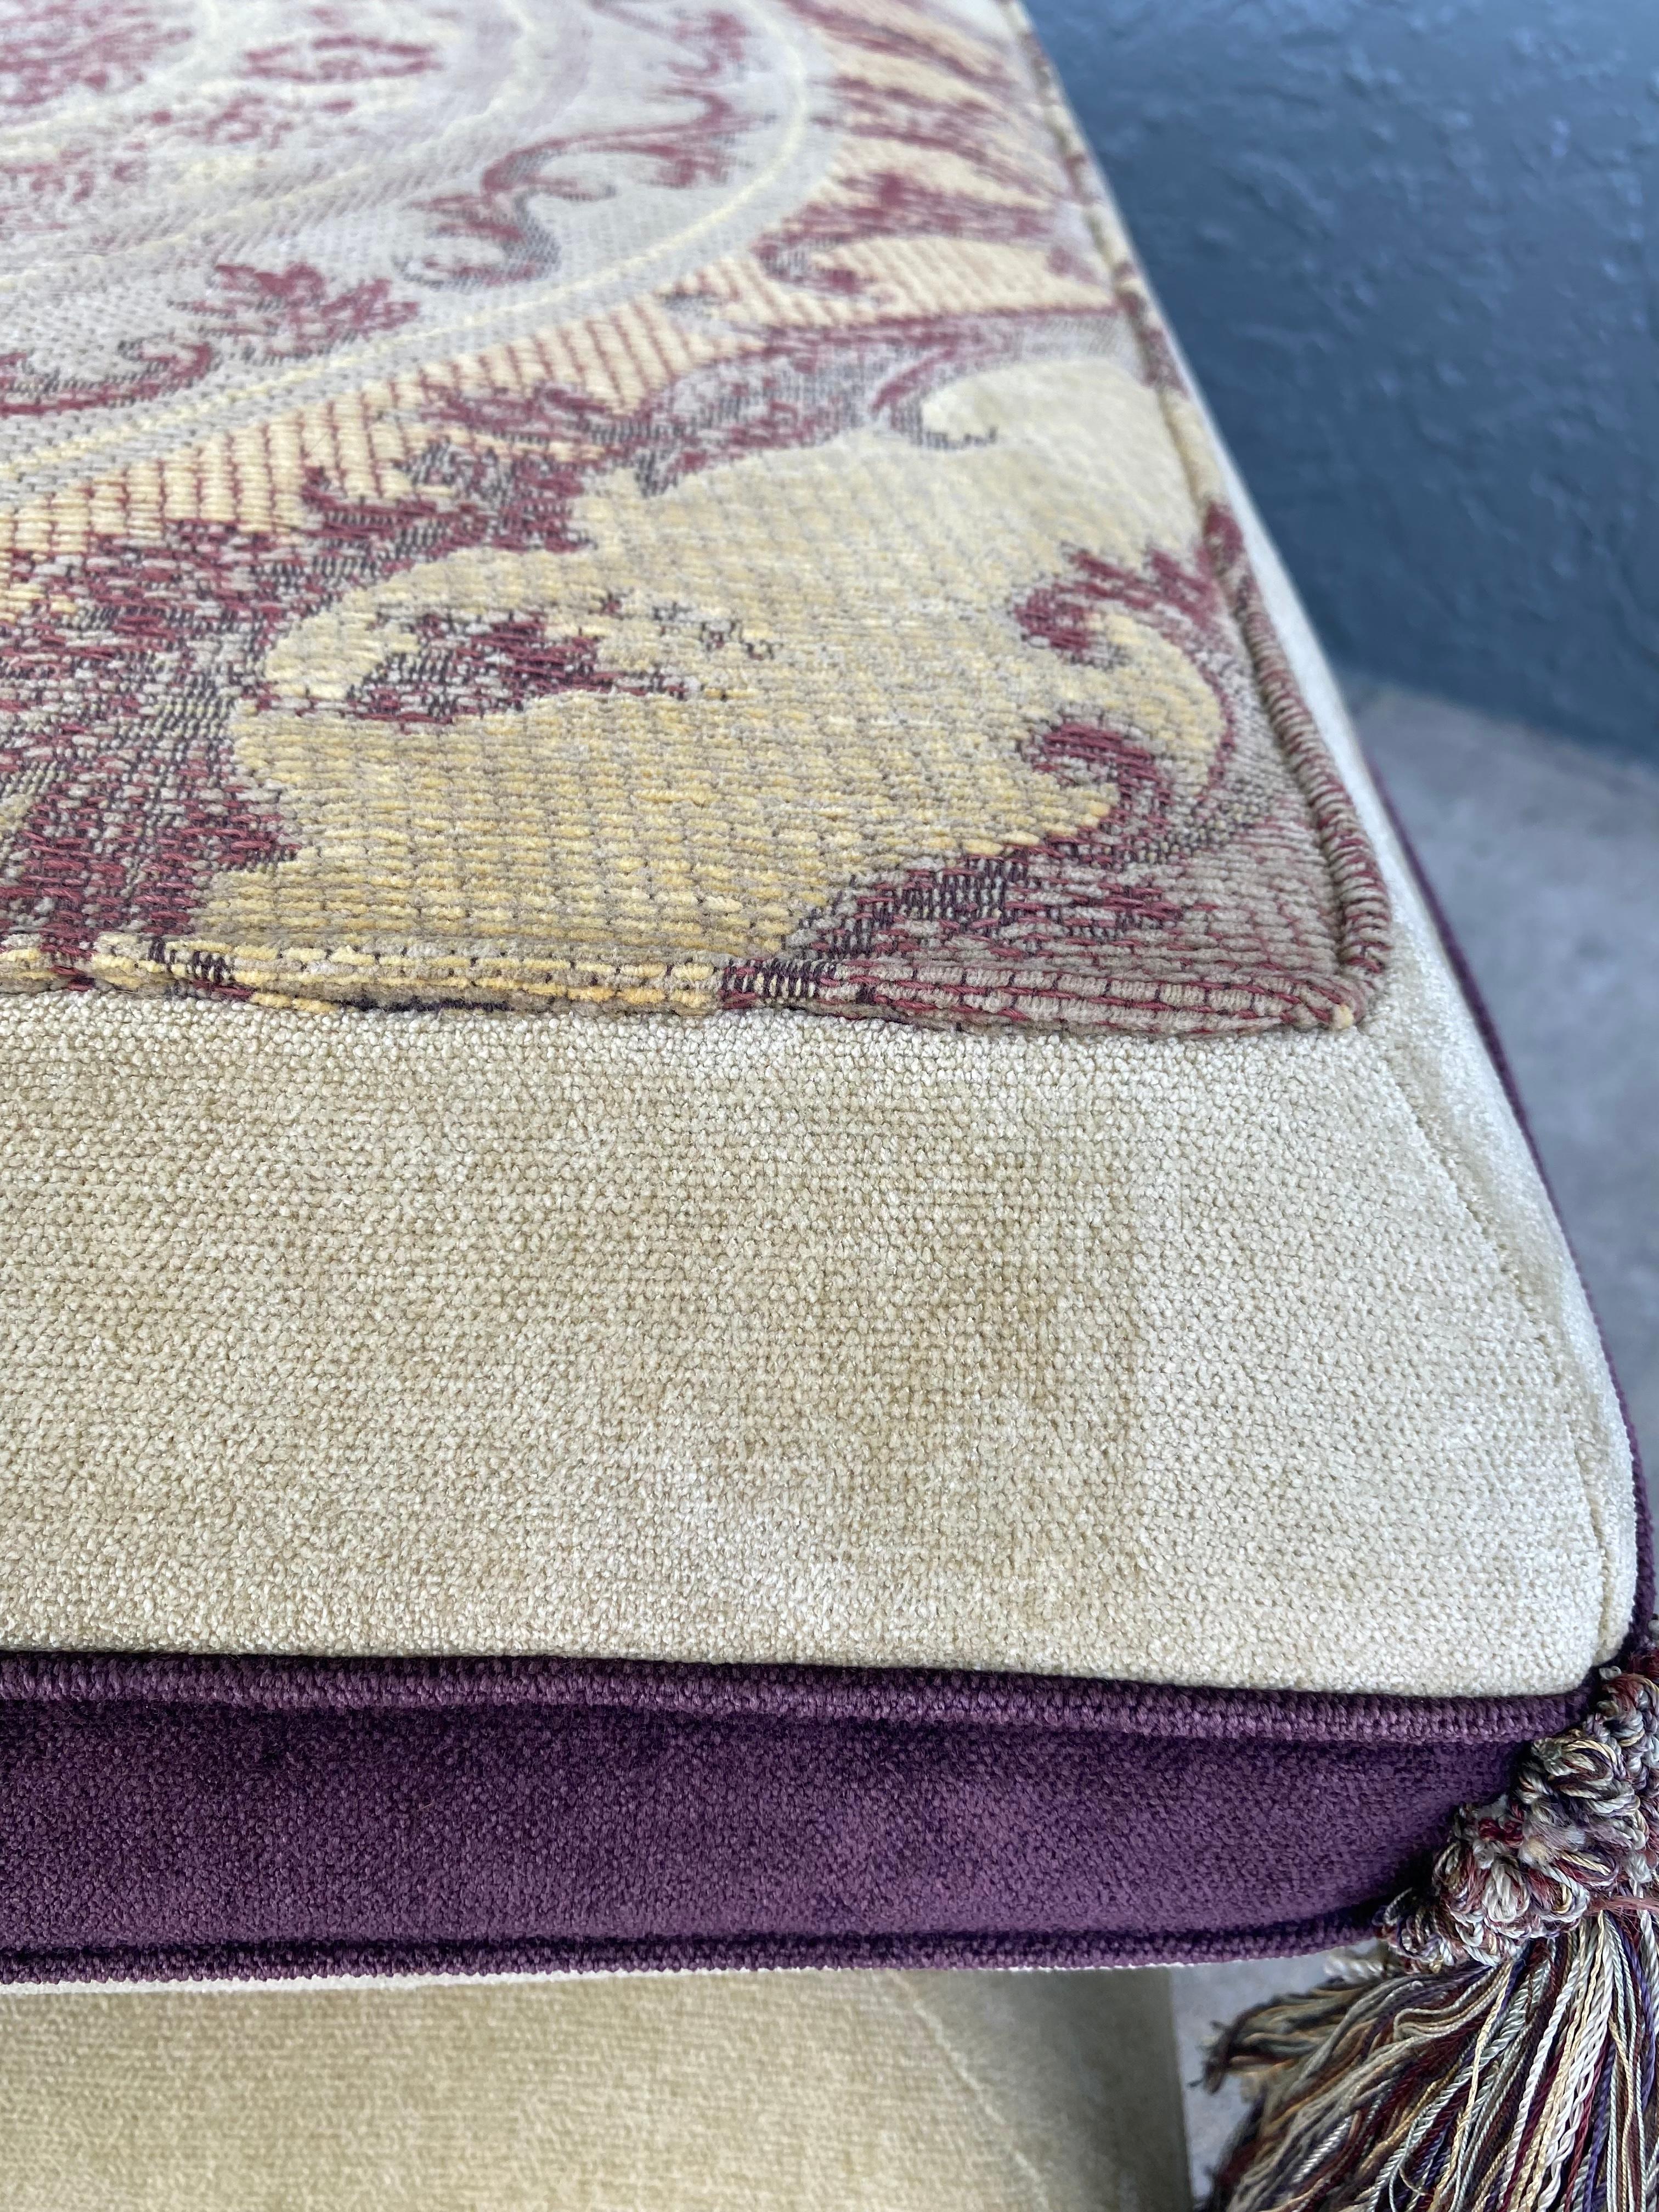 Rare Roche Bobois “Mah Jong” Style Floor Pillowtop Ottoman Stools, Set of 2 For Sale 9